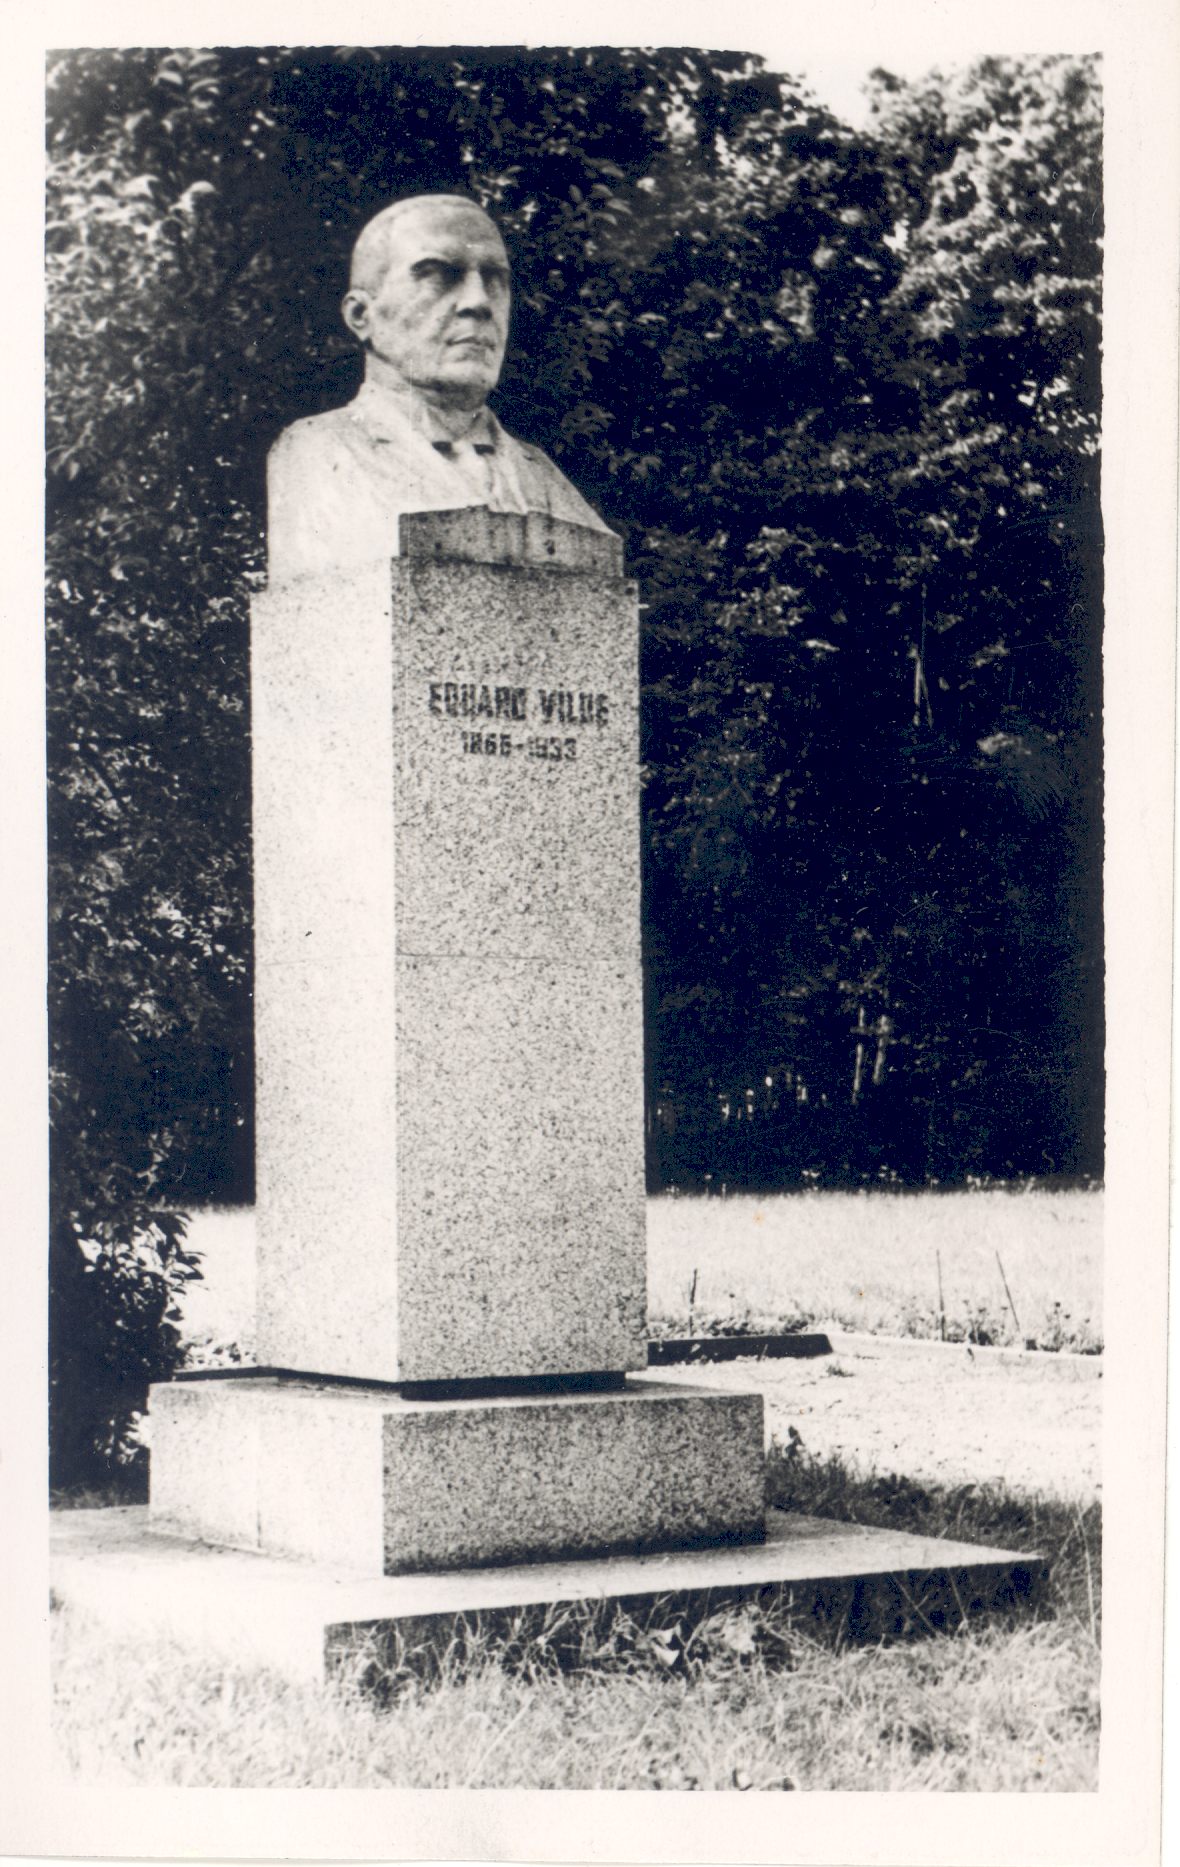 Vilde, Eduard, monument in Muugal. Sculptor f. Sannames